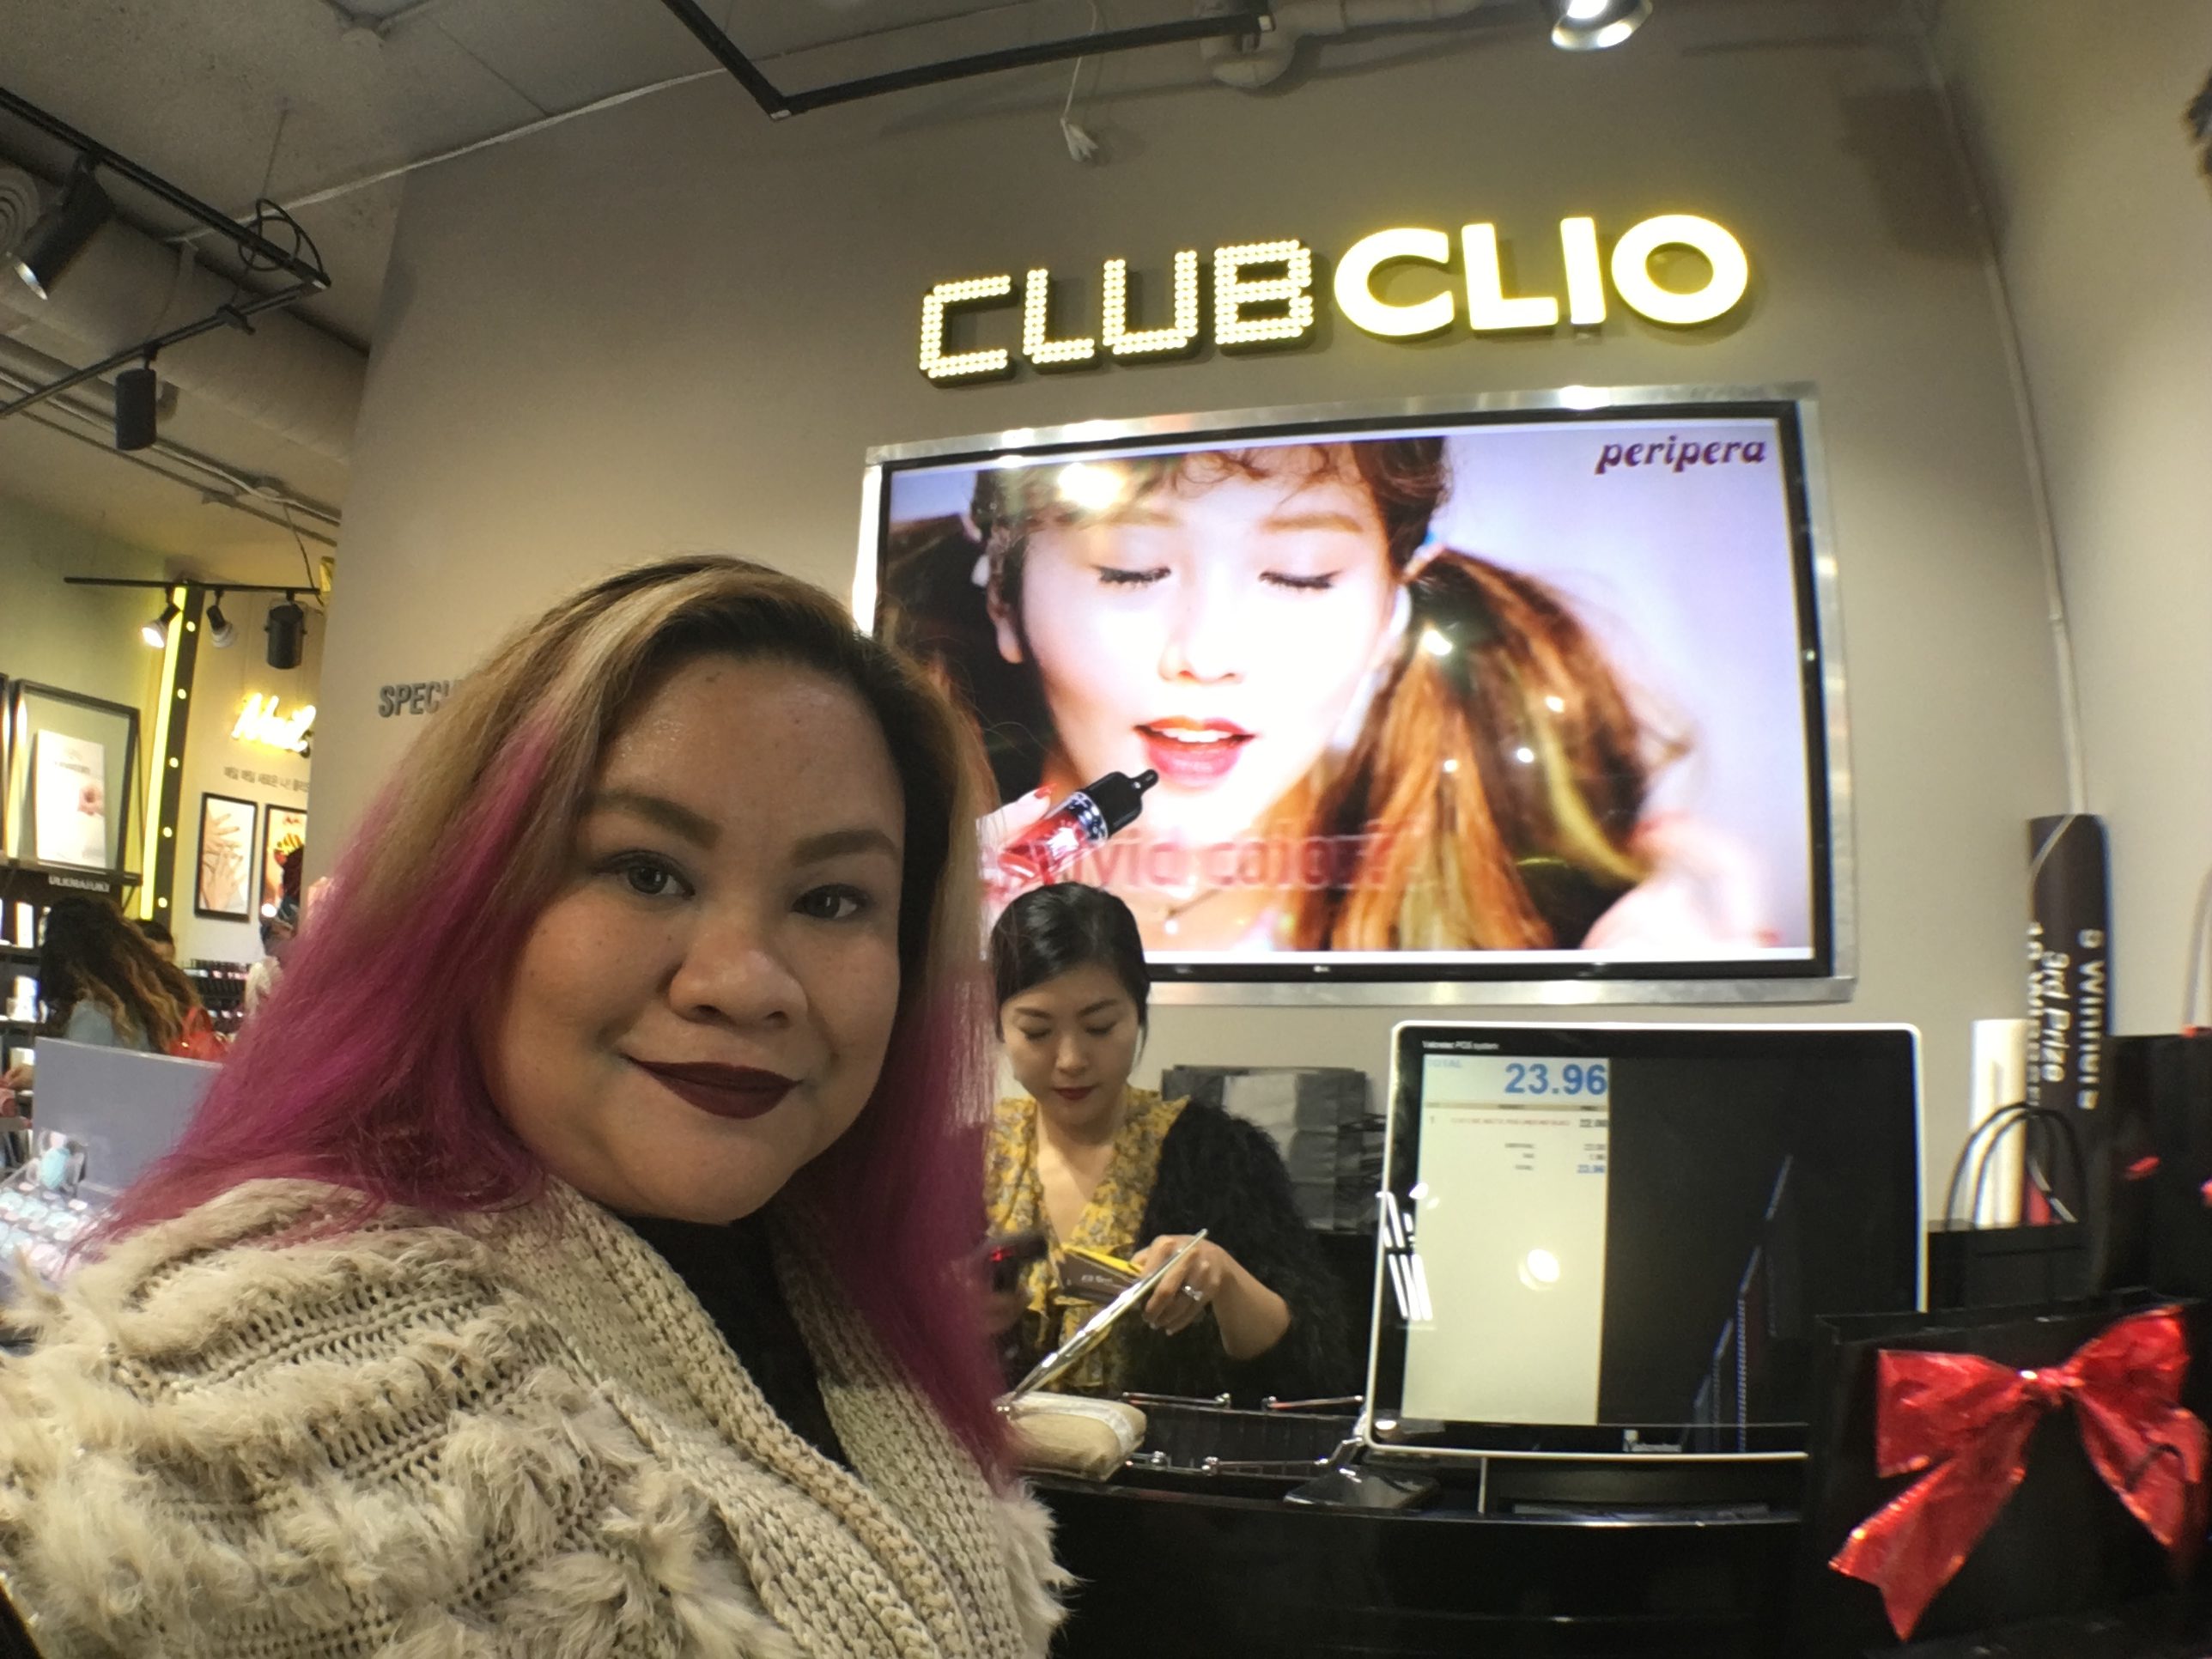 Club Clio Korean Beauty Brand New York USA opening